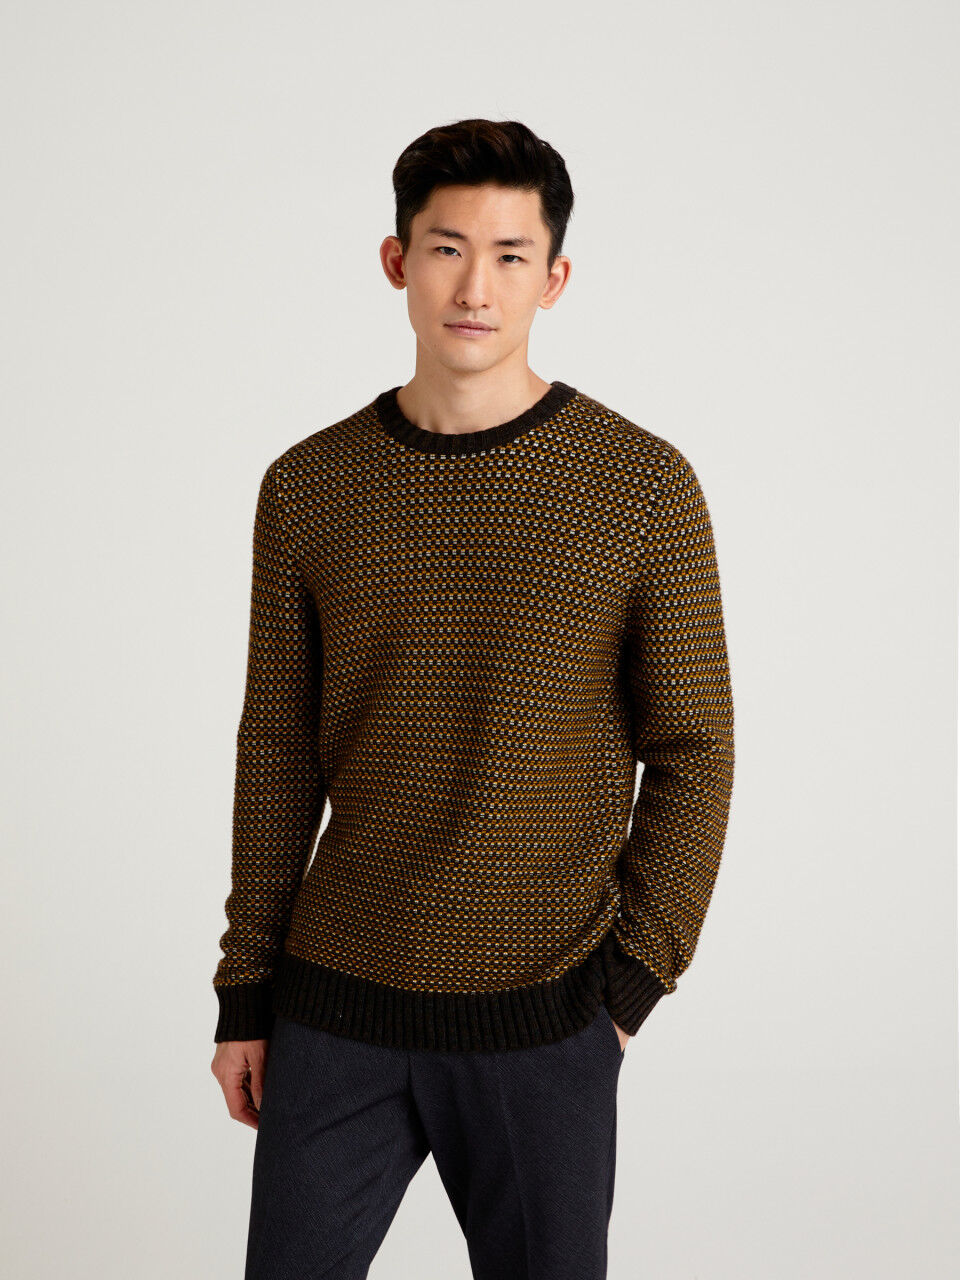 Three-dimensional pattern sweater